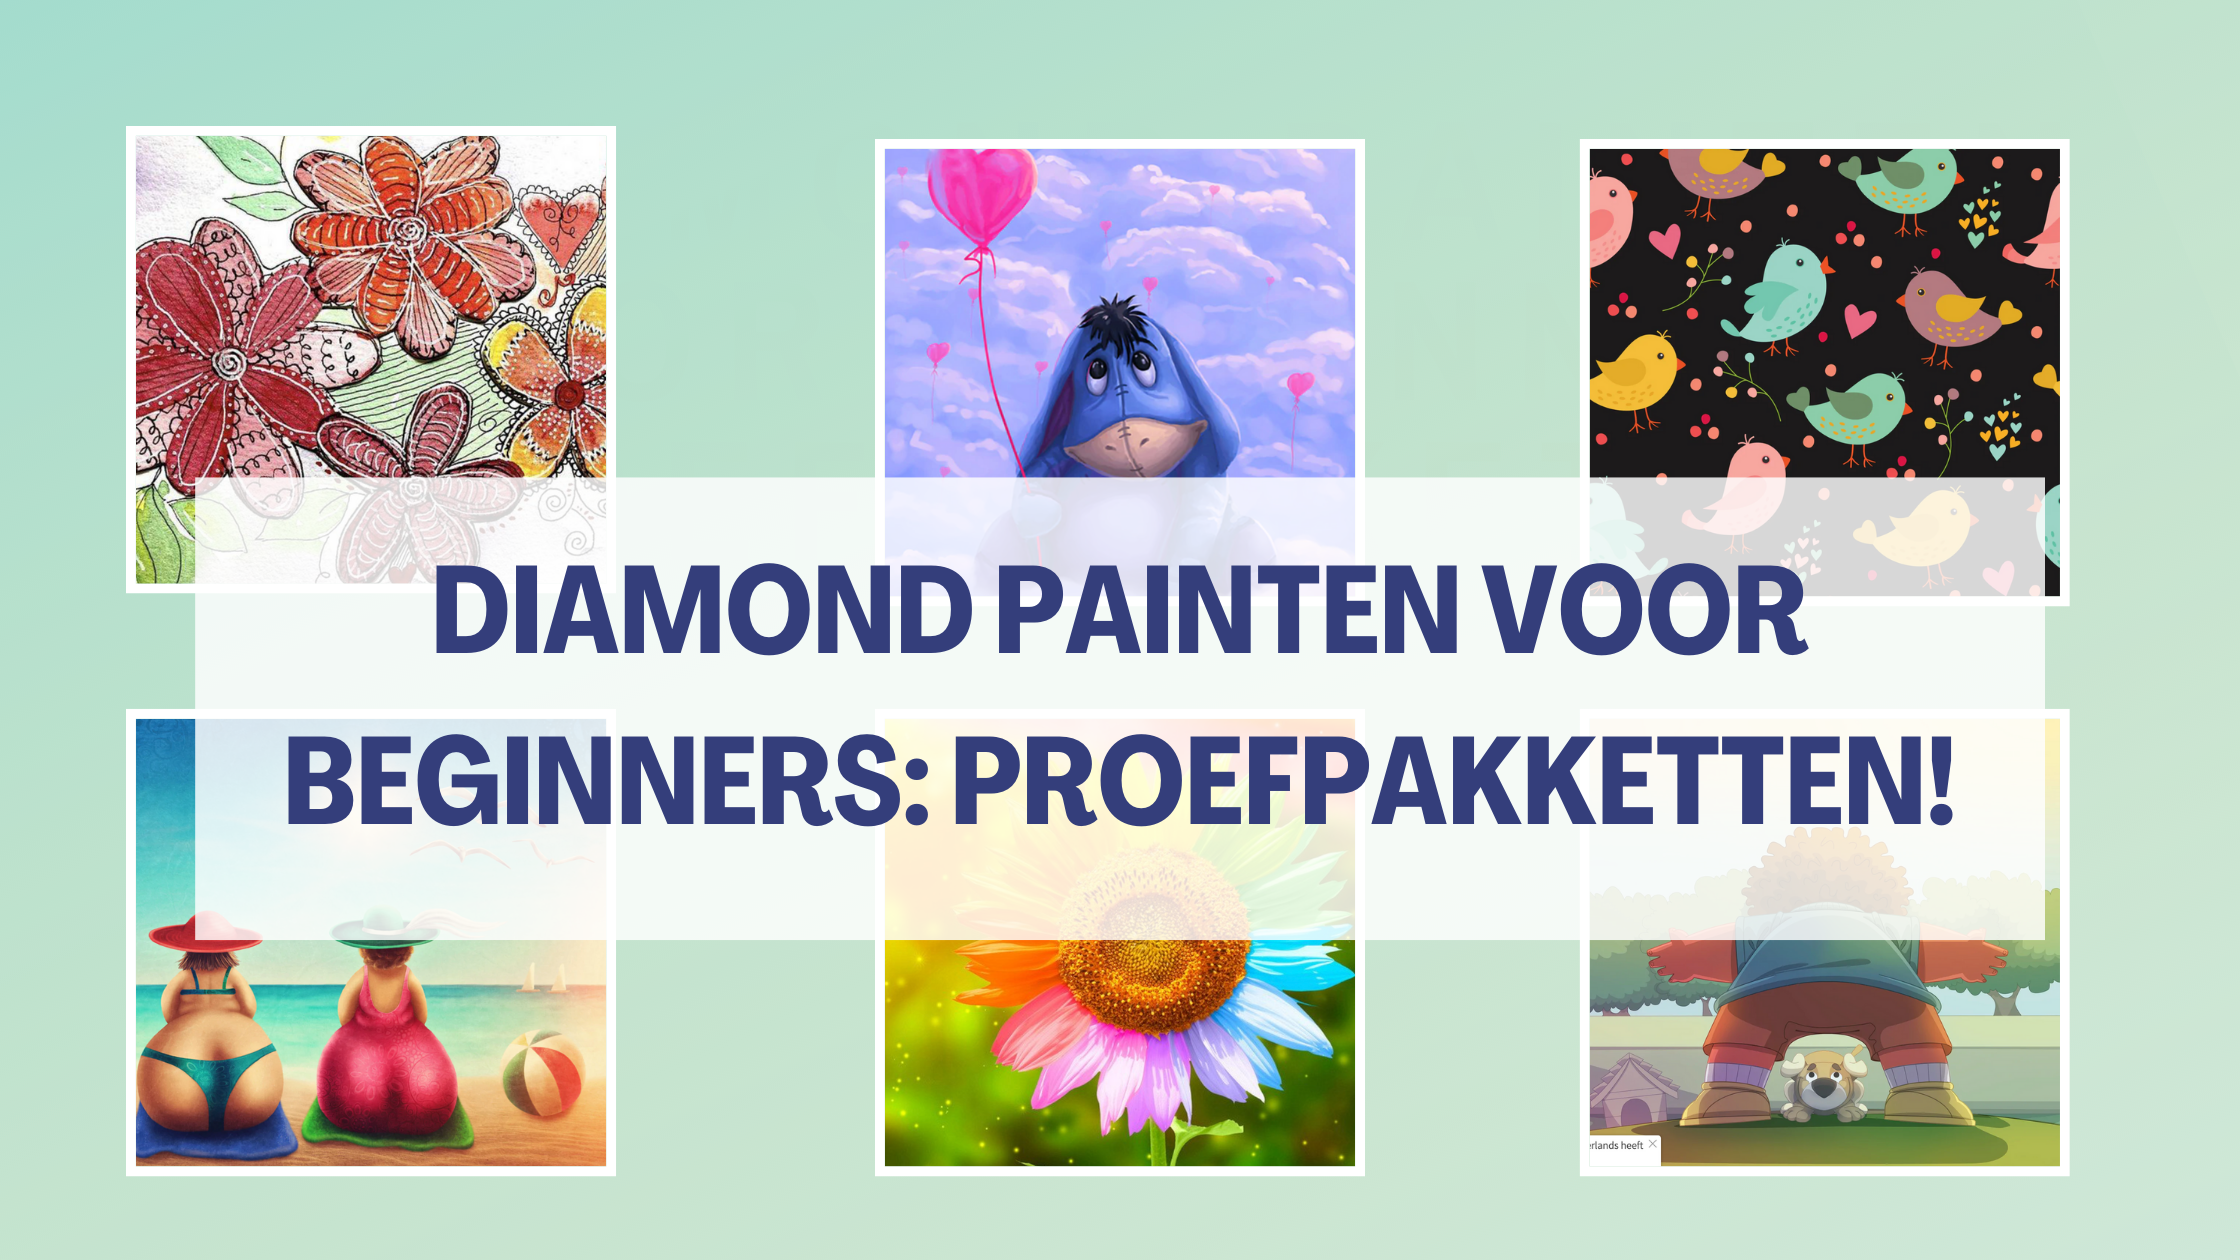 Diamond Painten voor beginners: proefpakketten! Diamond Painting Planet